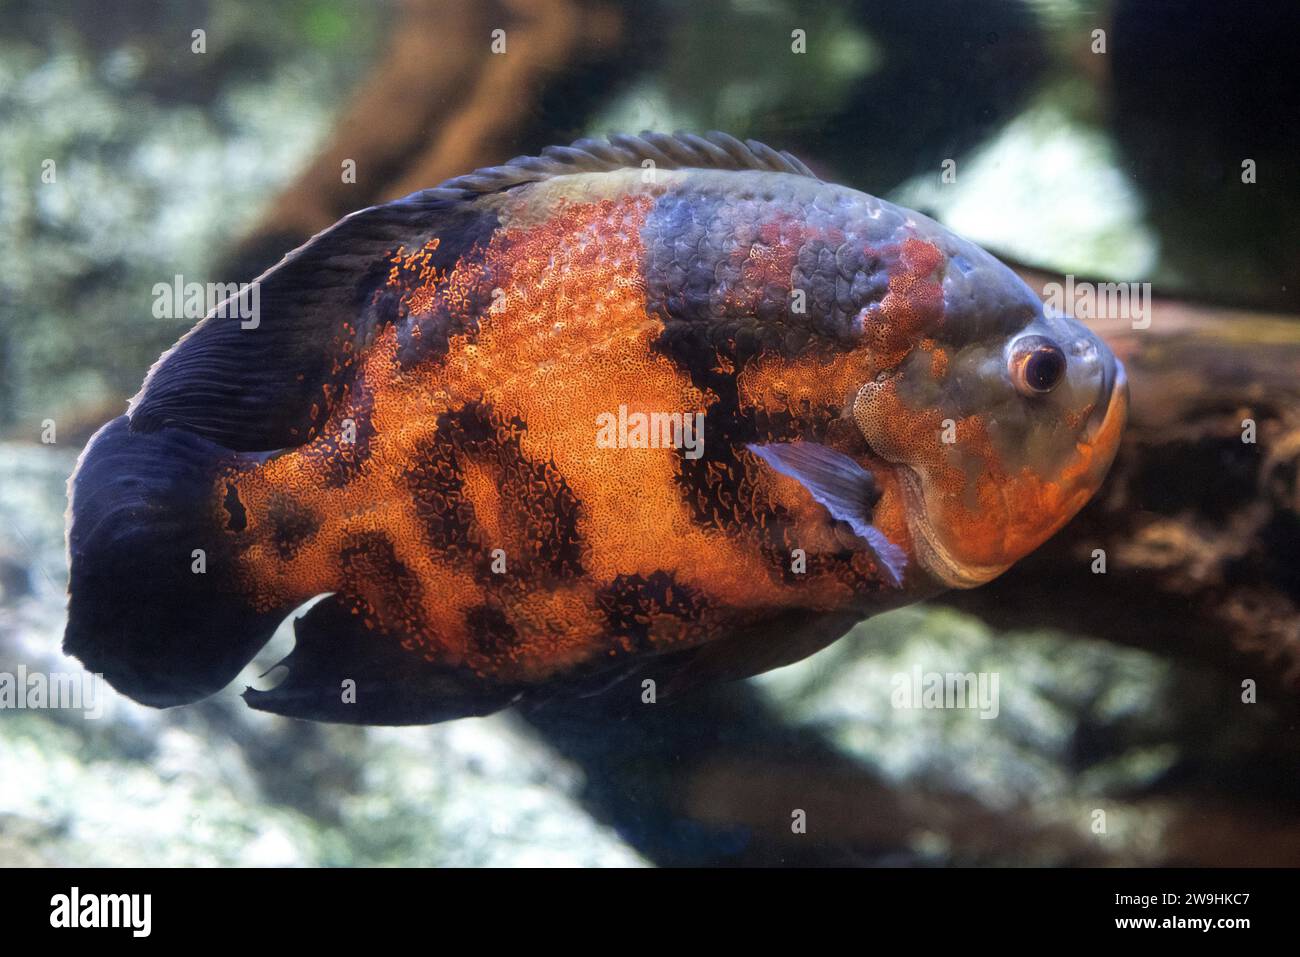 Oscar or tiger oscar (Astronotus ocellatus) is a fresh water fish native to Amazon River basin. Stock Photo